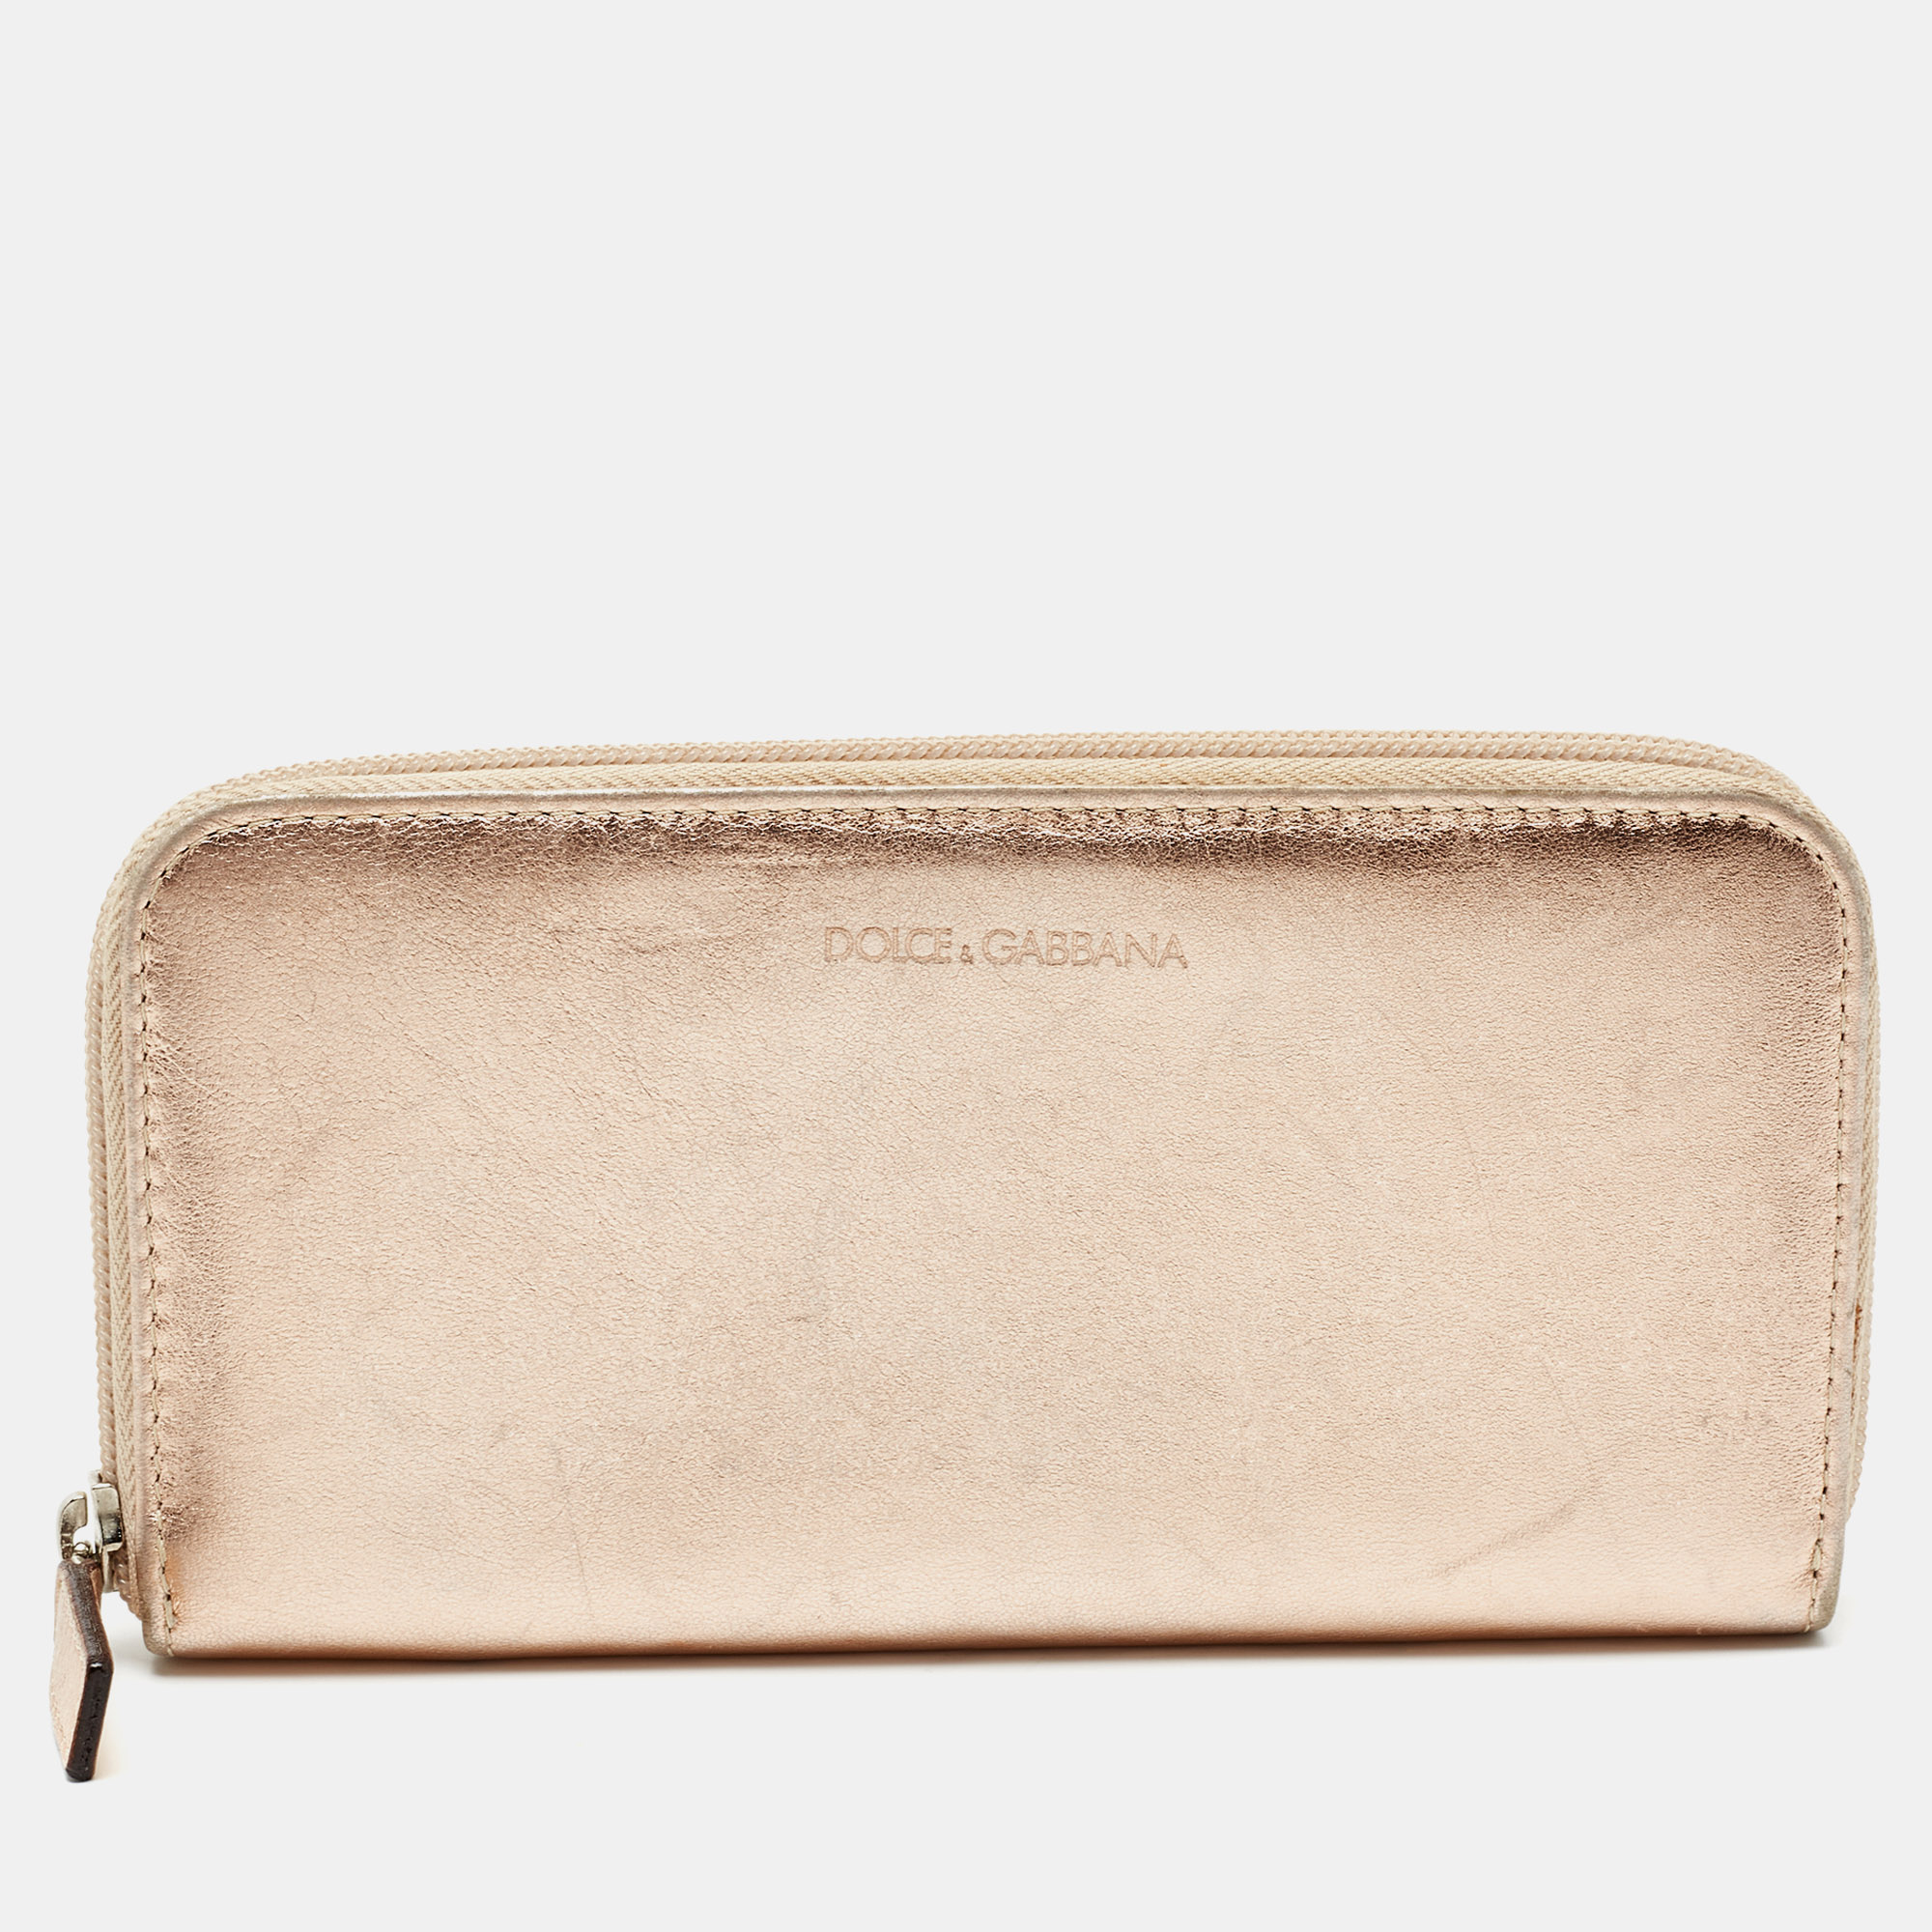 Dolce & Gabbana Metallic Rose Gold Leather Zip Around Wallet